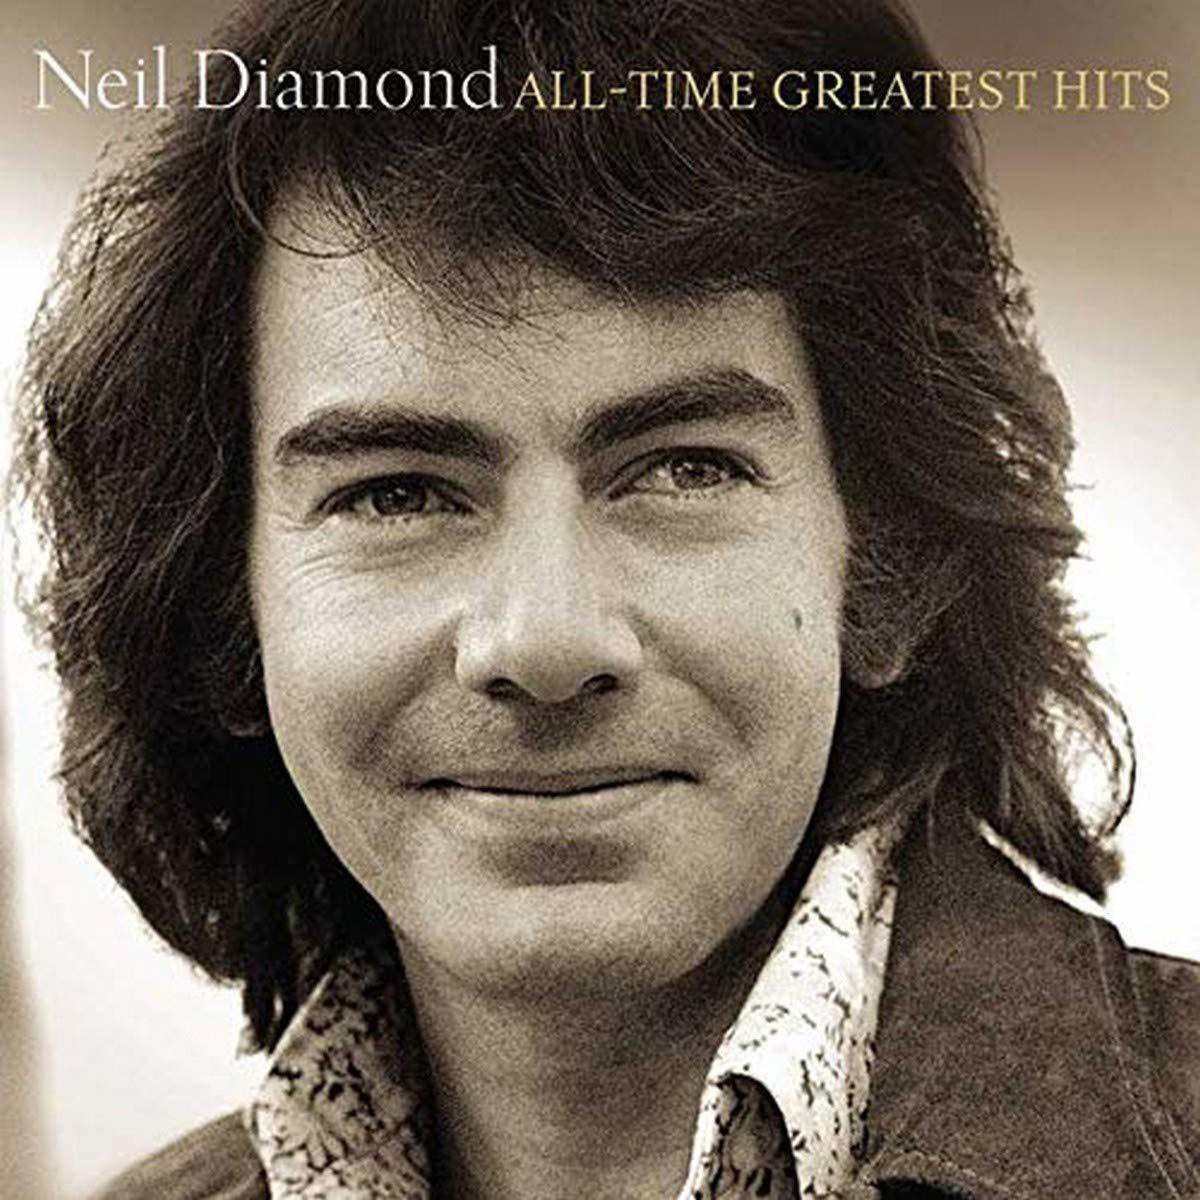 GREATEST - HITS Neil (Vinyl) Diamond - ALL-TIME